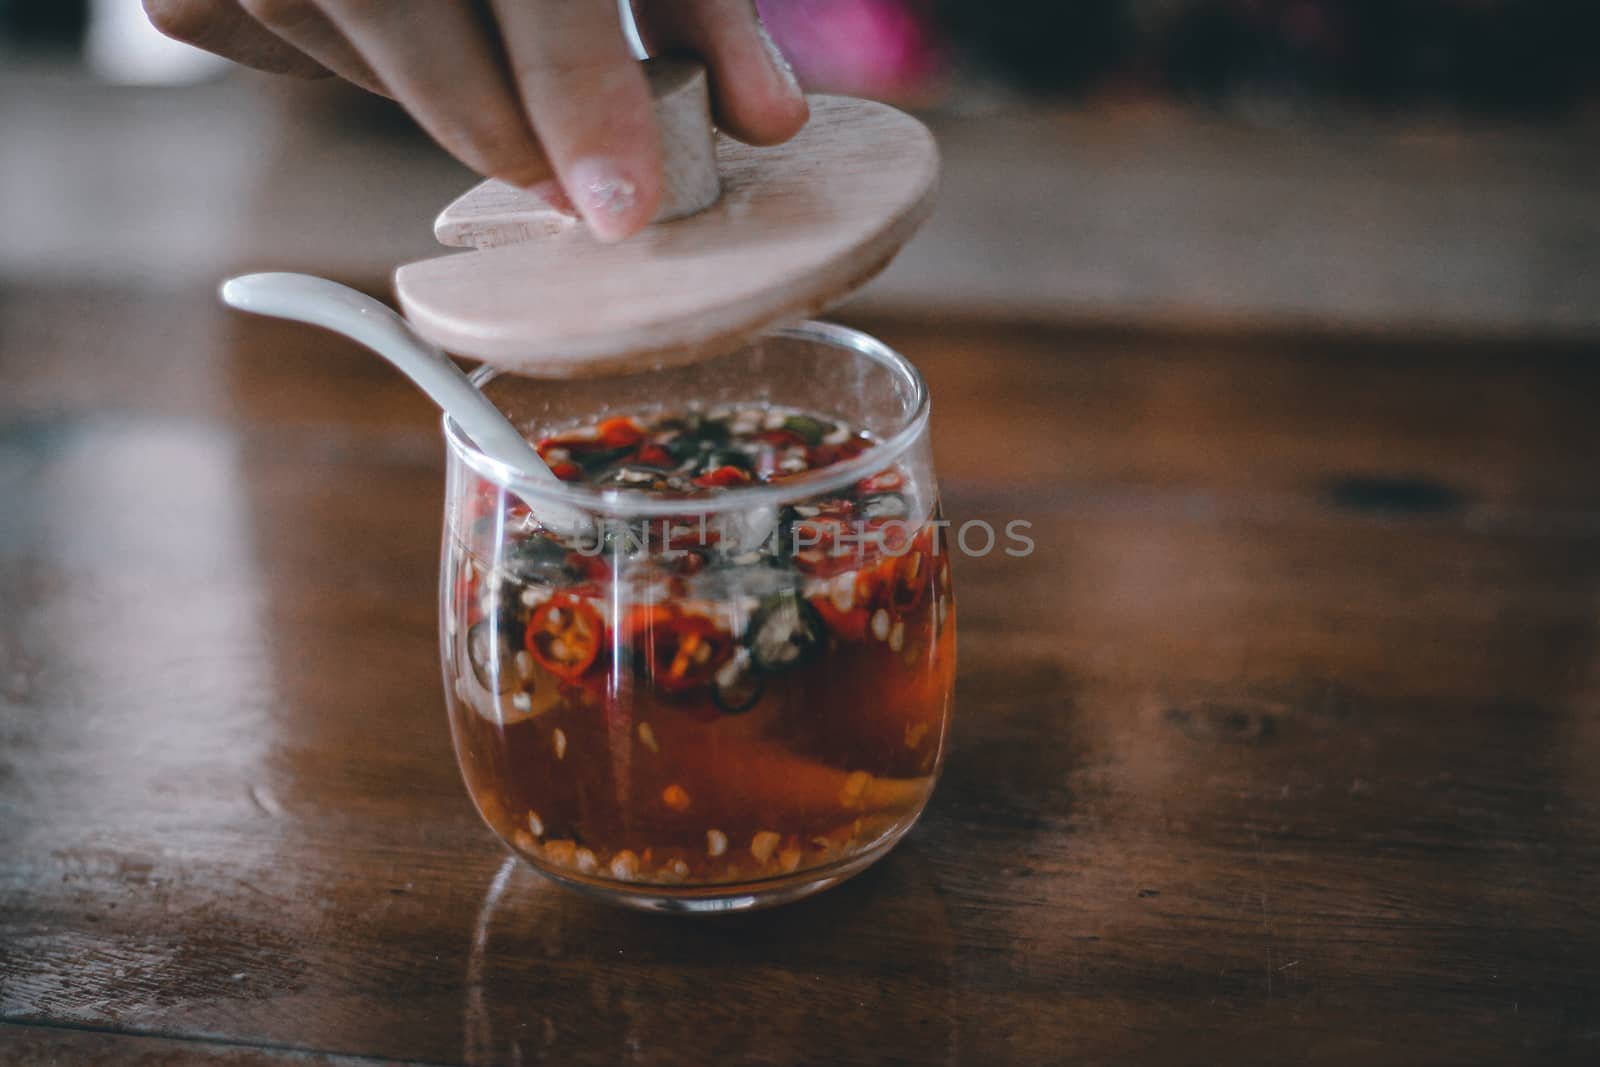 Prik Namsom or chilli garlic vinegar sauce that is a traditional condiment in thai cuisine